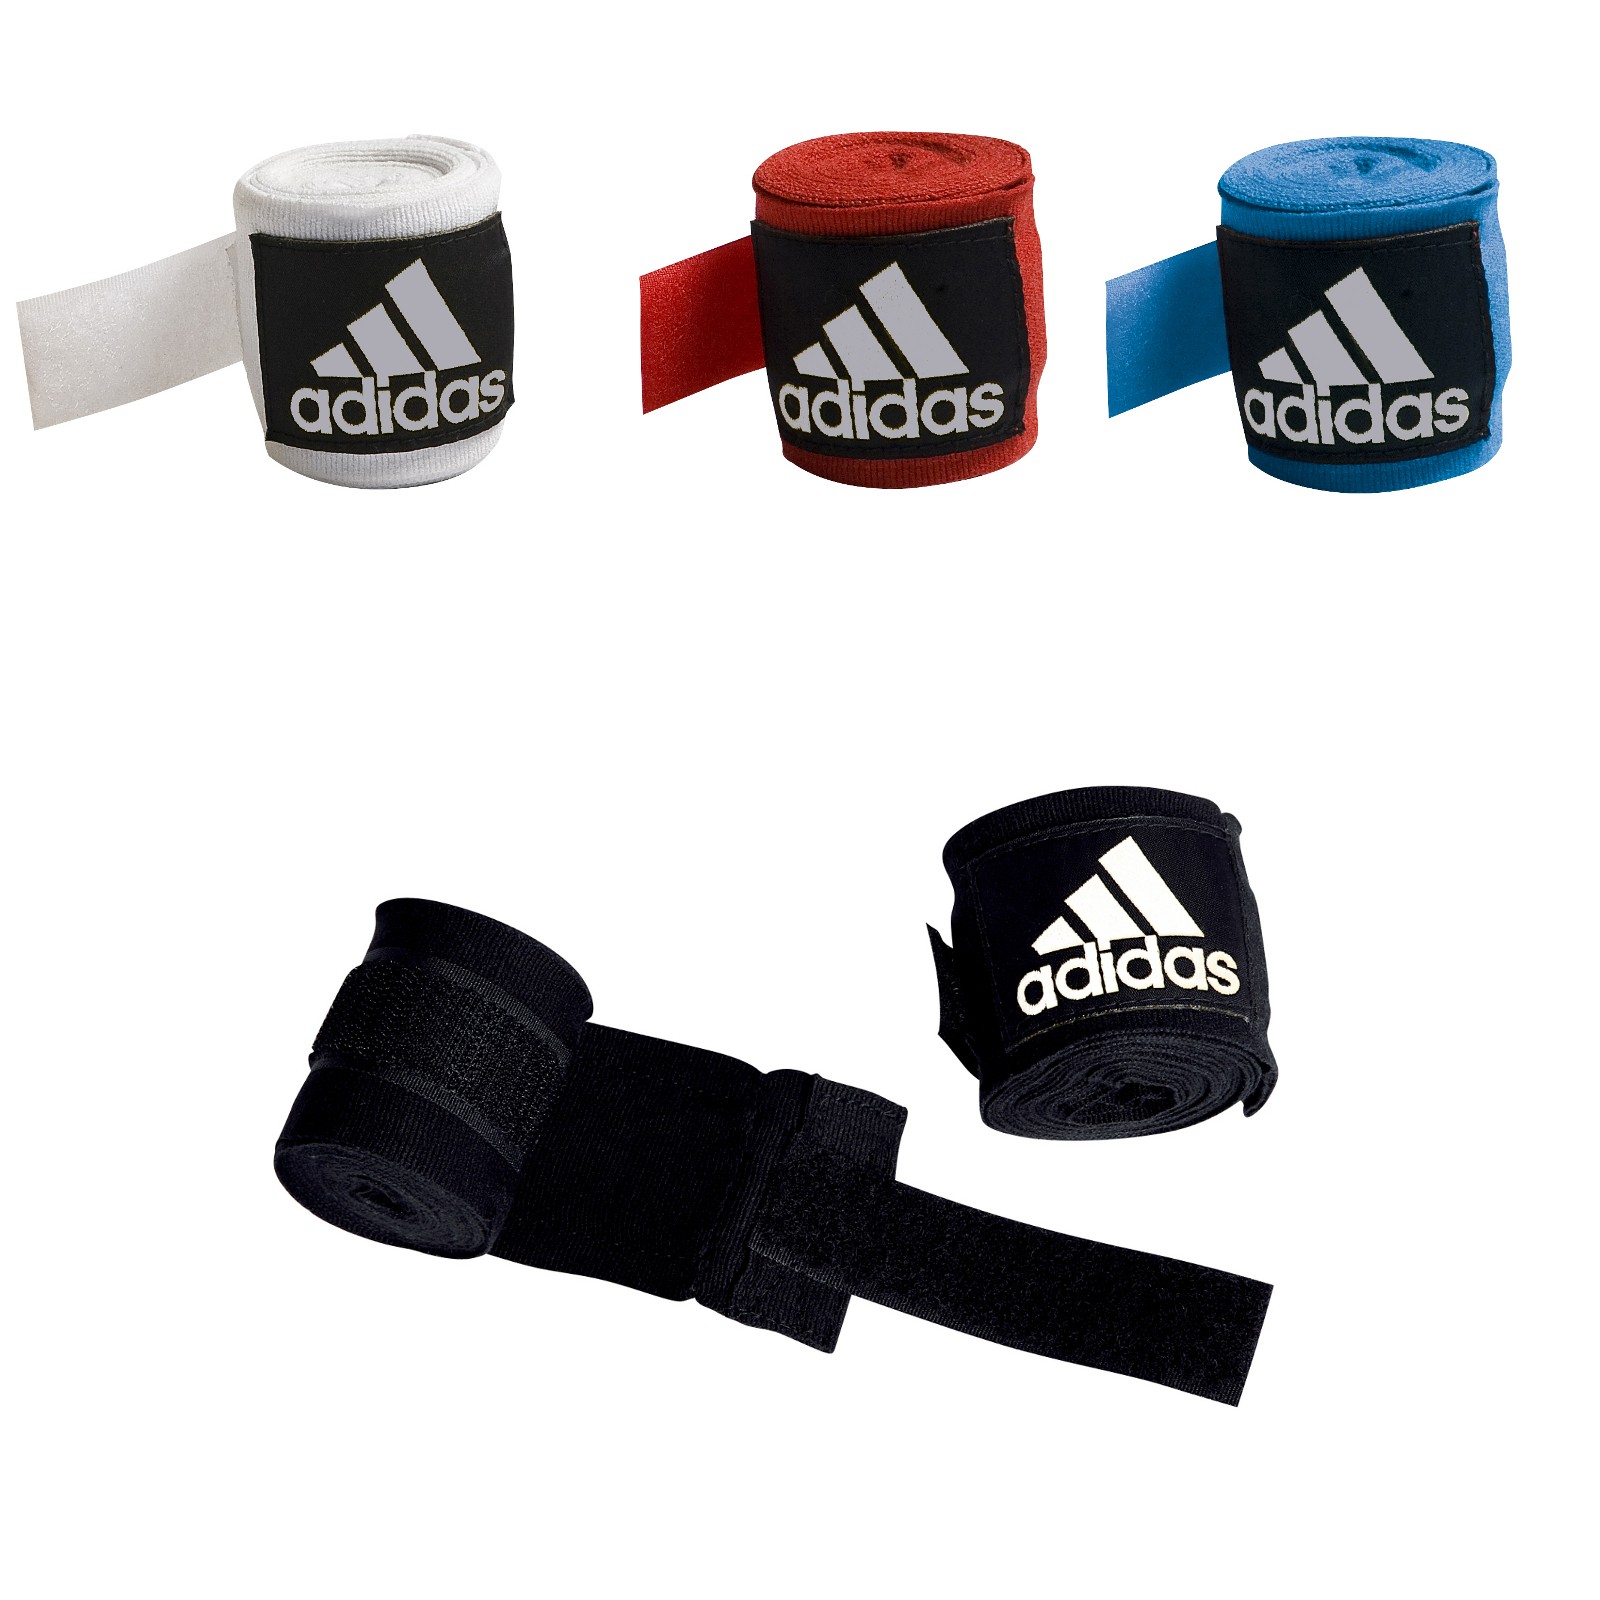 https://resources.sport-tiedje.com/bilder/adidas/boxing/adidas_boxing_bandage/adidas_boxbandagen_w_1600.jpg